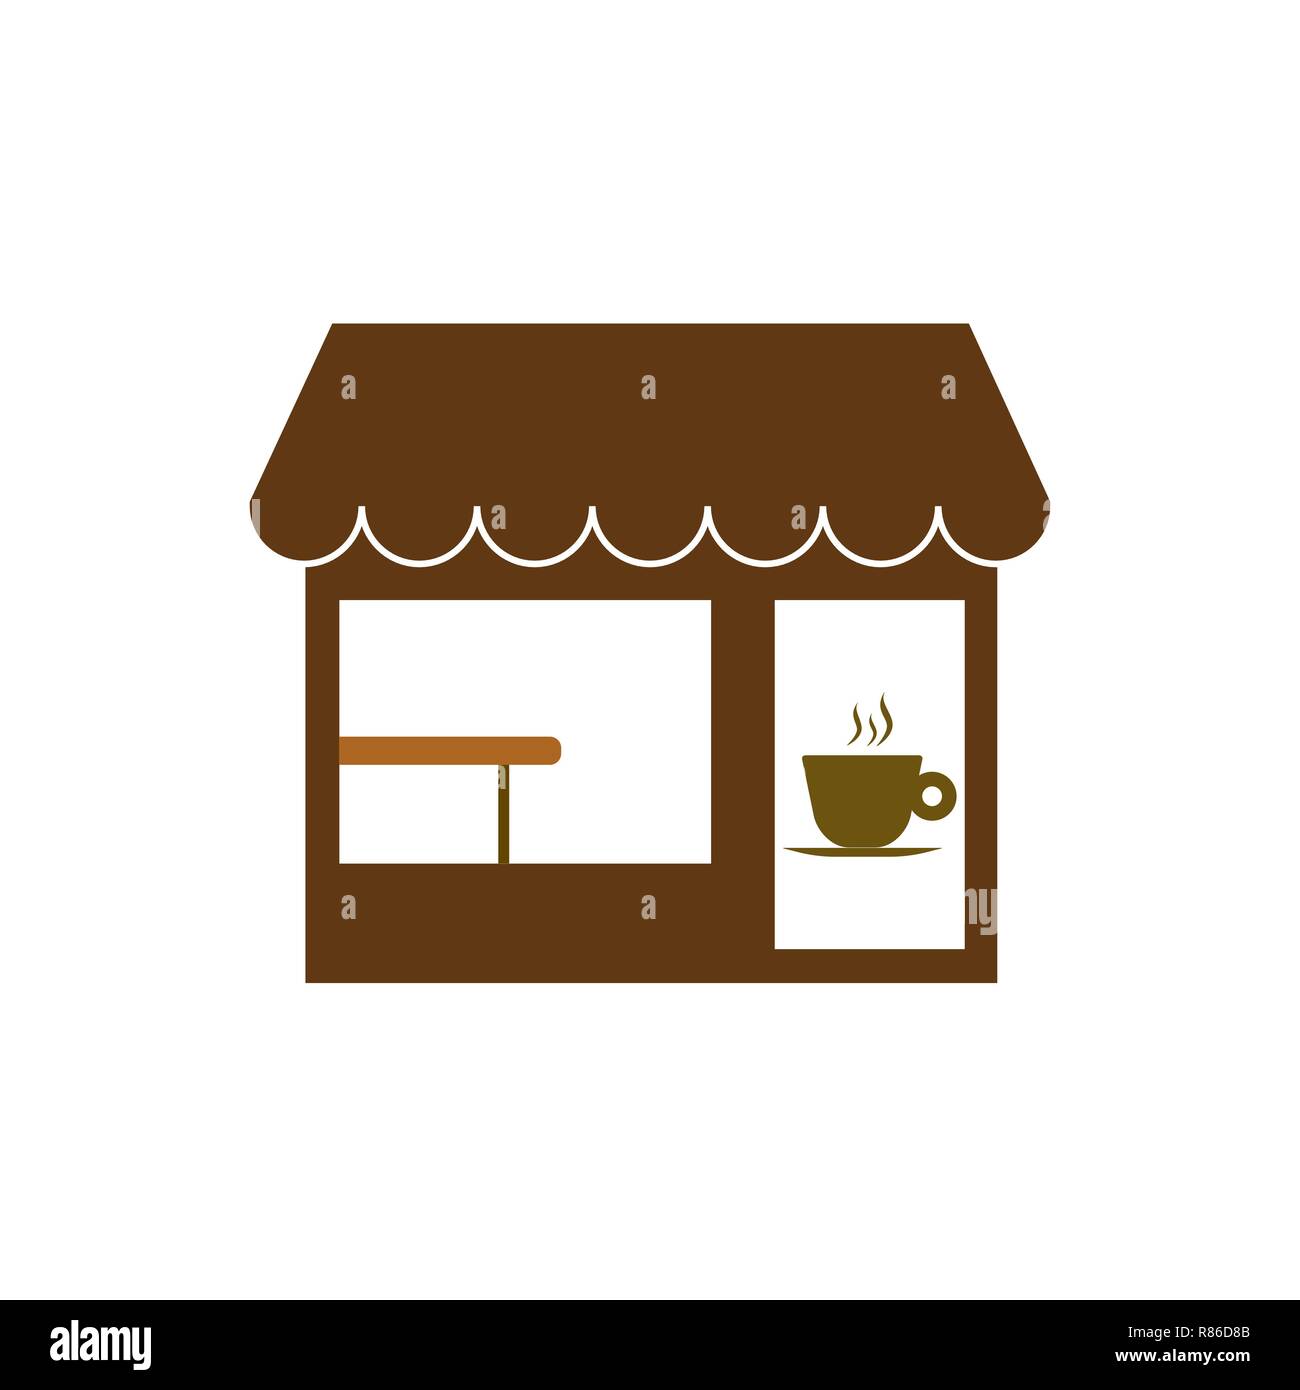 Commercio, coffee shop, icona store. Illustrazione Vettoriale. Illustrazione Vettoriale